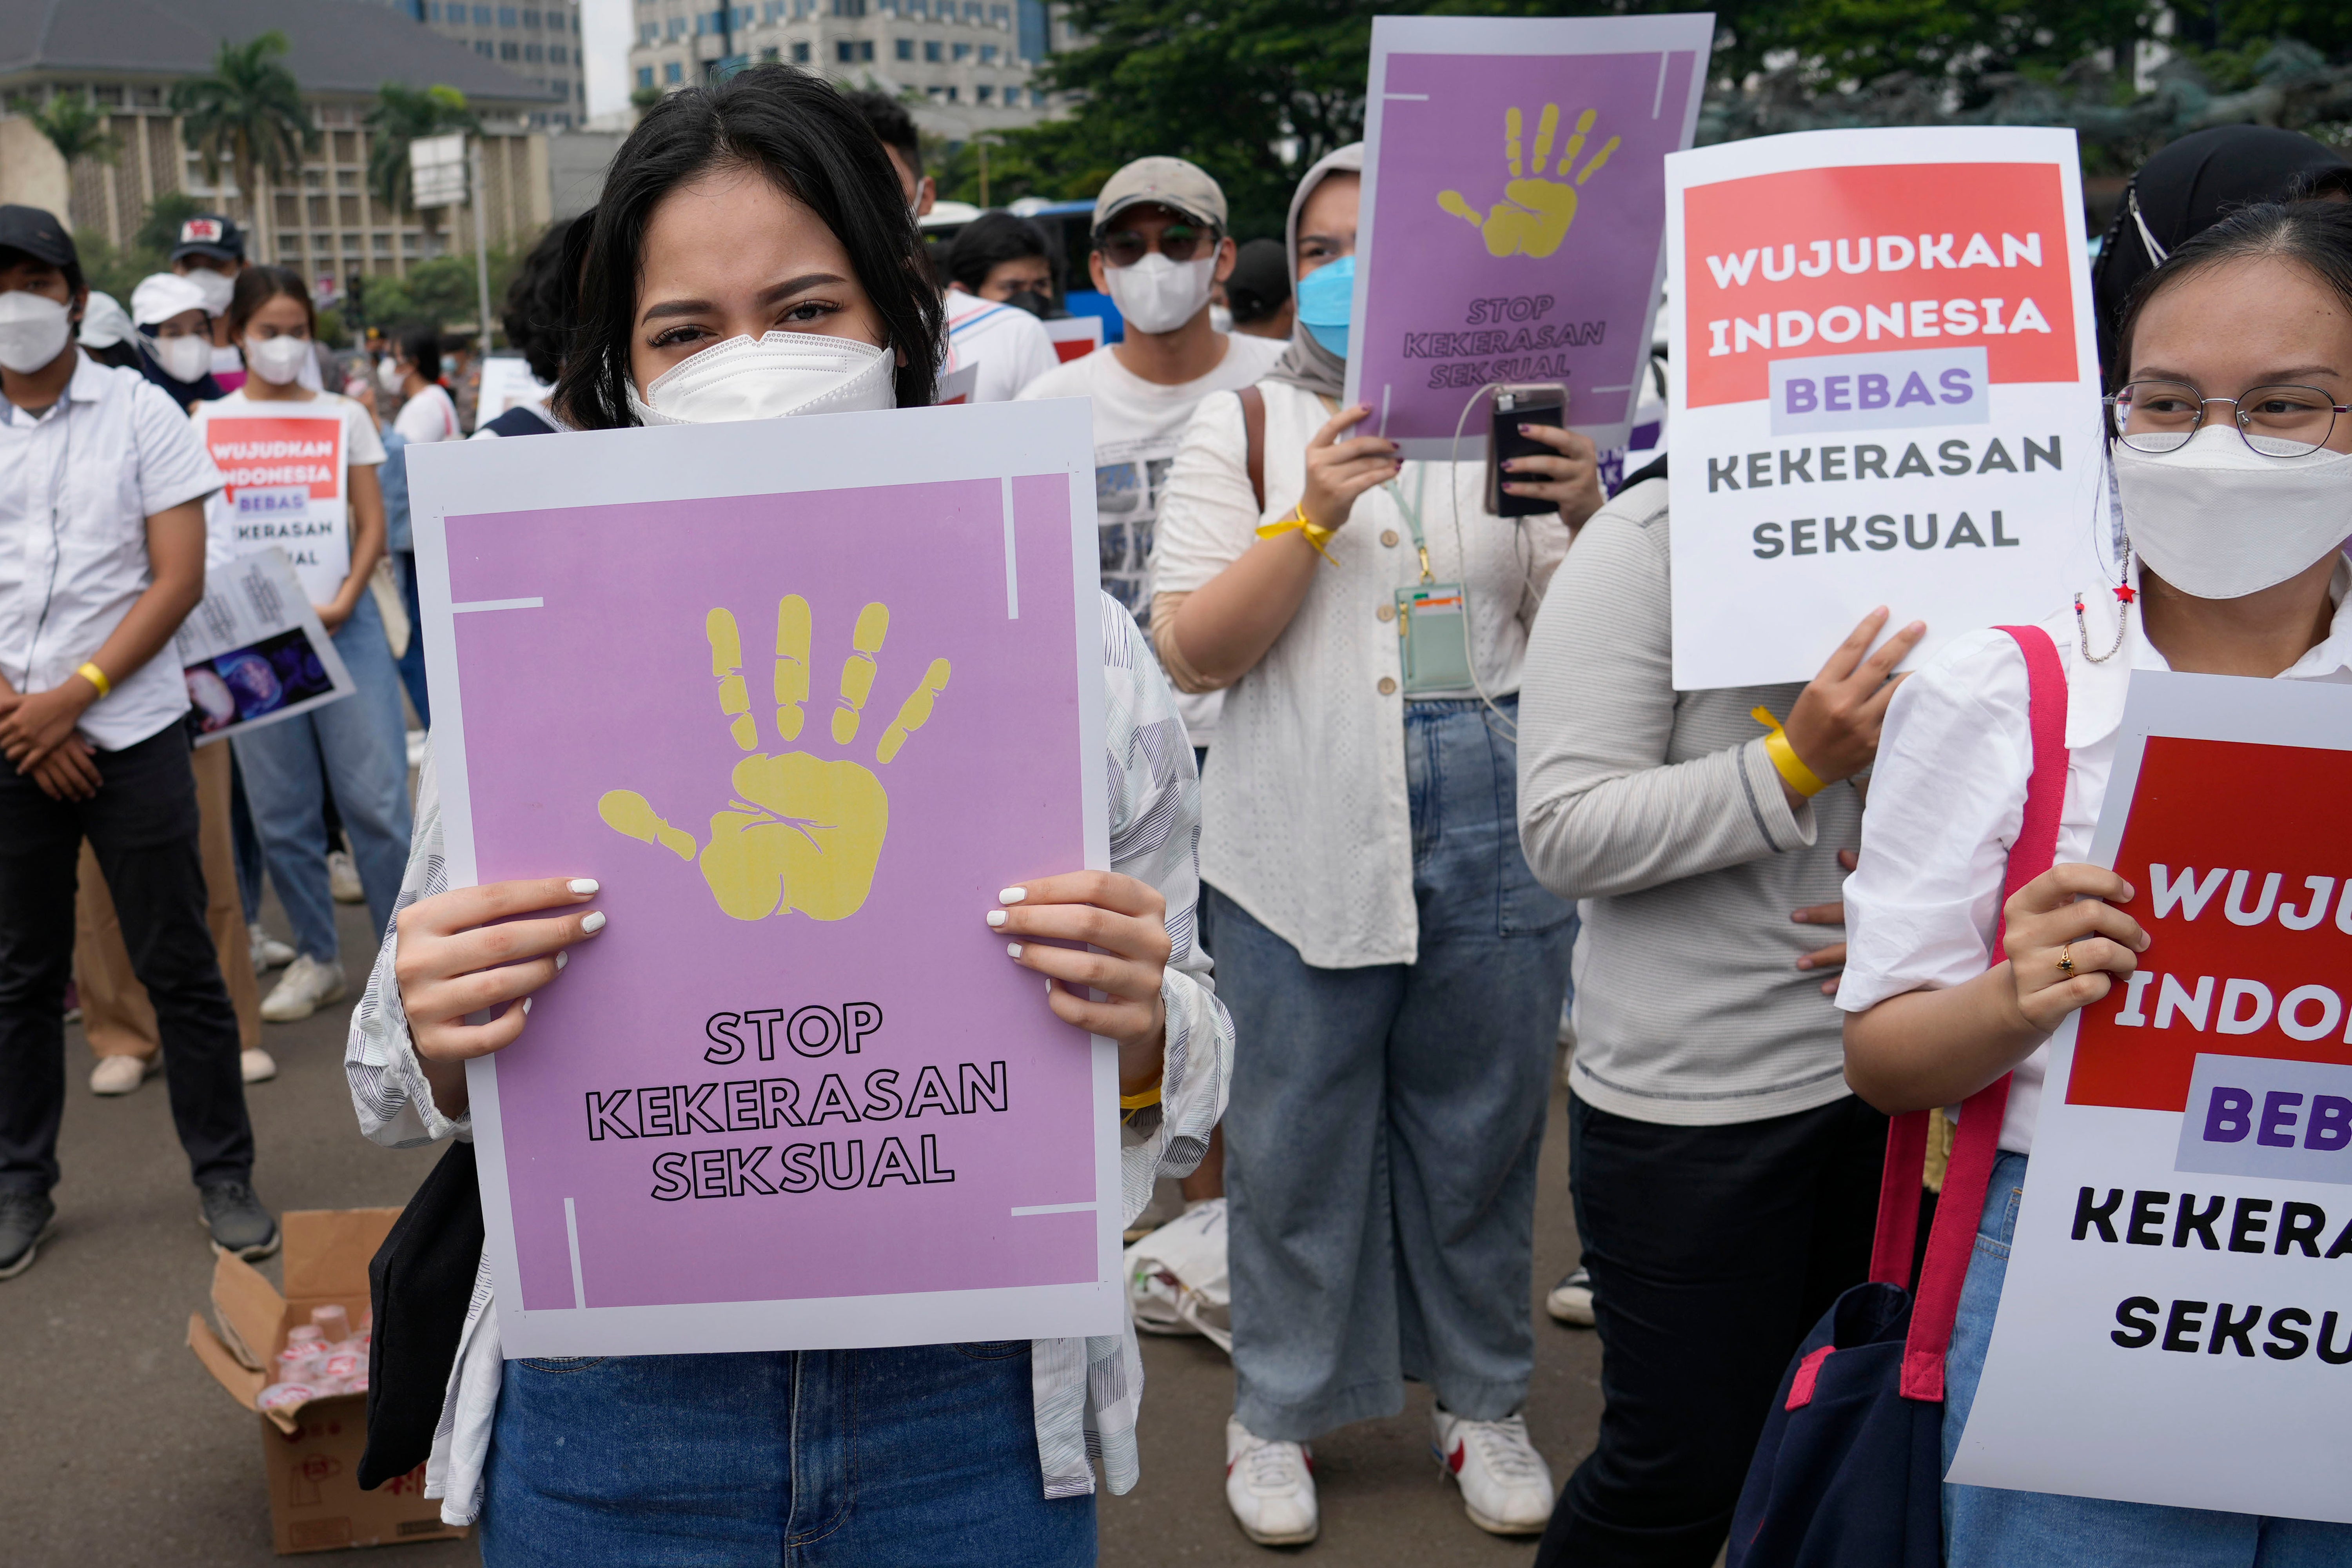 Indonesia Aprueba Ley Contra Violencia Sexual Tras Casos Independent Español